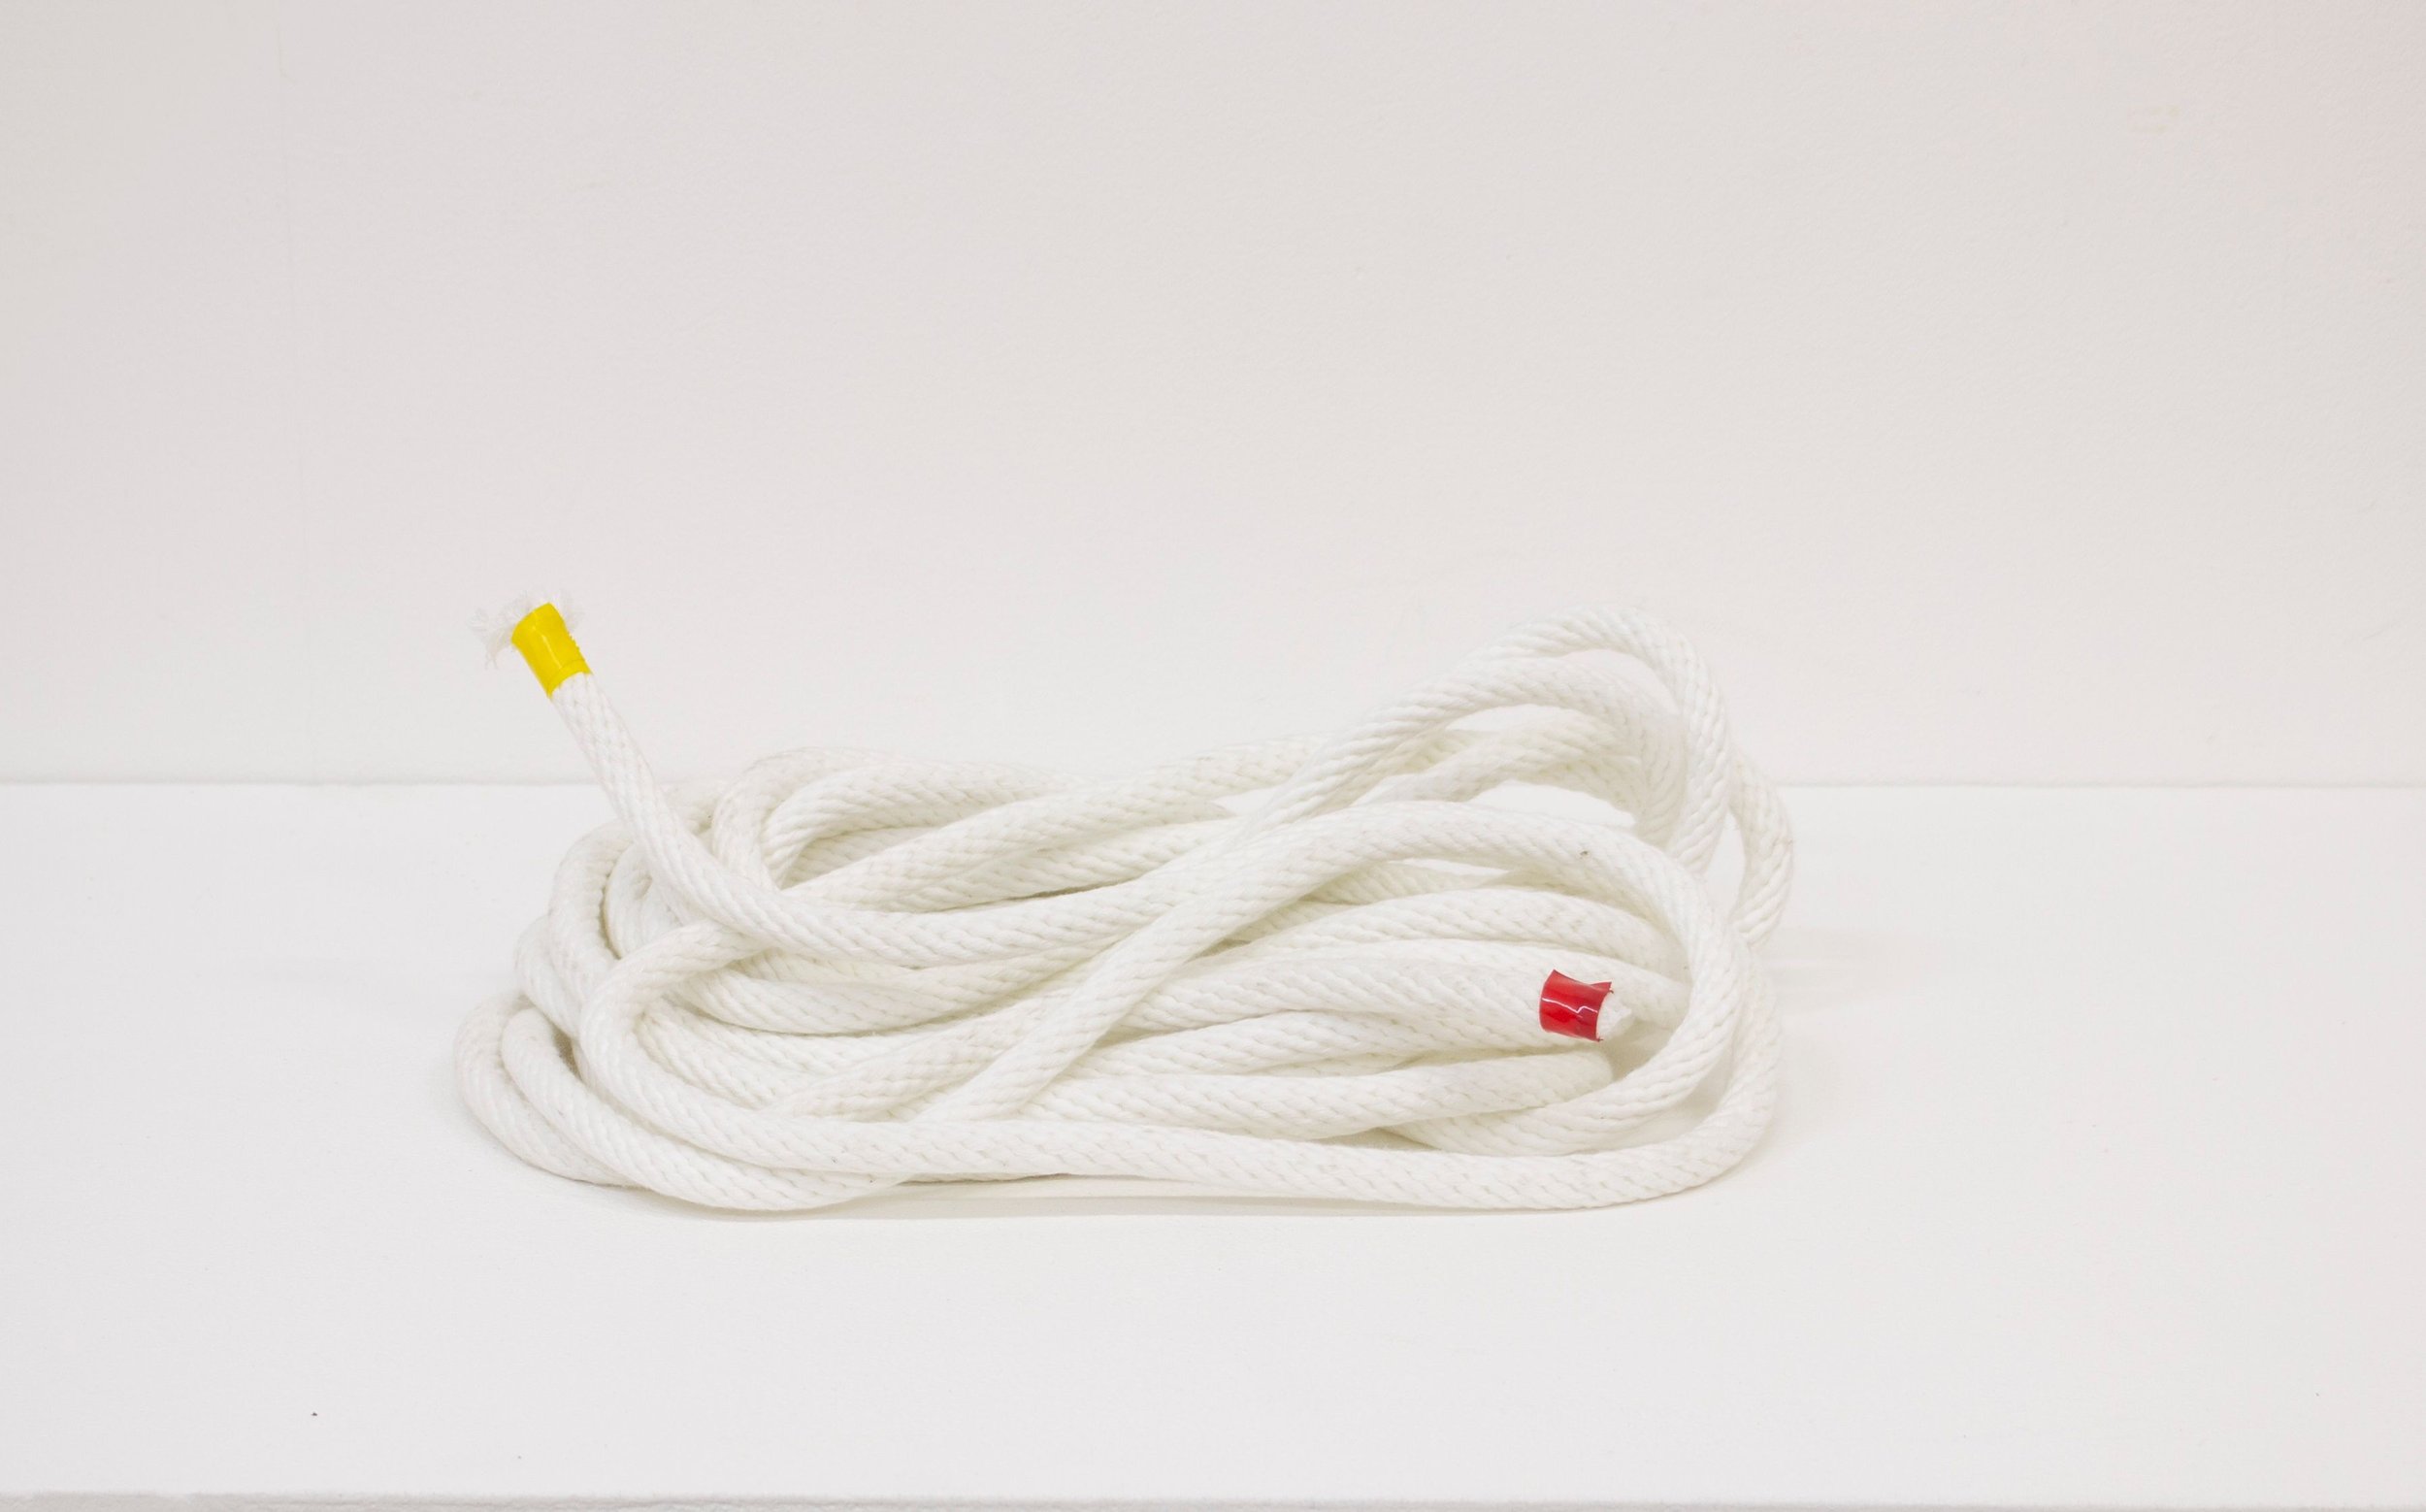 Souvenirs｜紀念品：〈Rope｜繩子〉2021